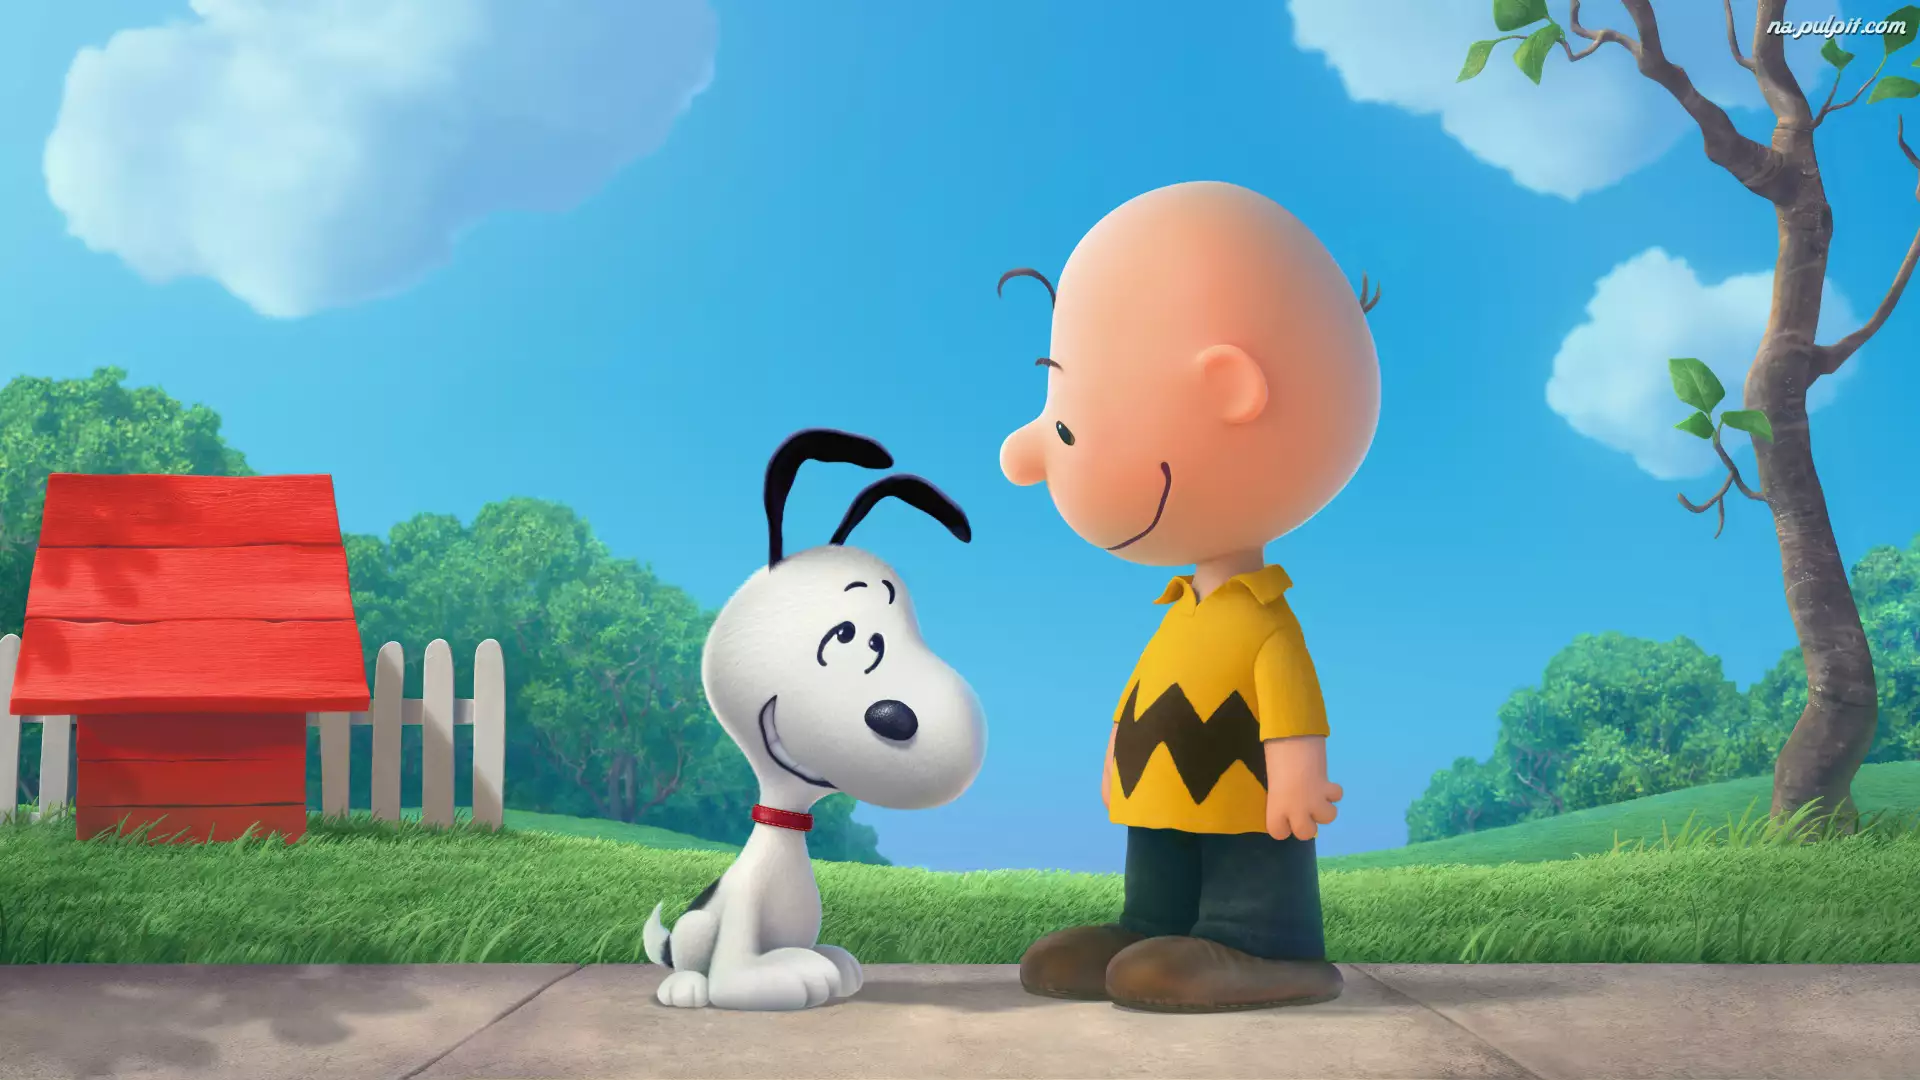 Fistaszki, Film animowany, Snoopy, Charlie Brown, Pies, ChĹopiec